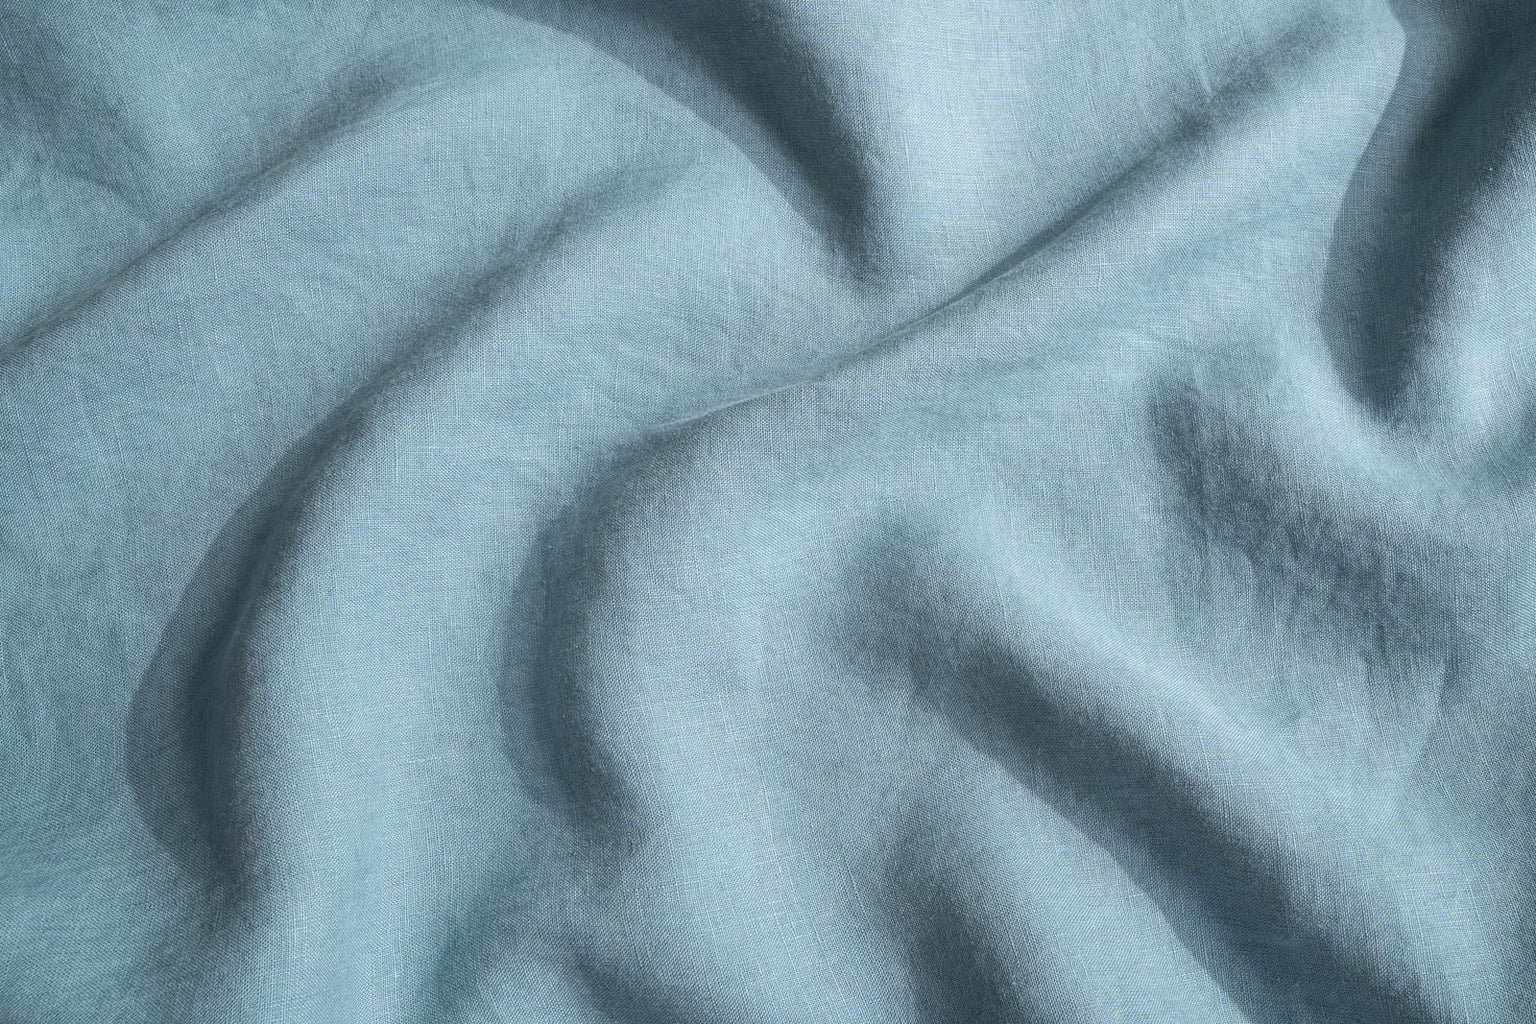 Marine Blue French Flax Linen Bedding